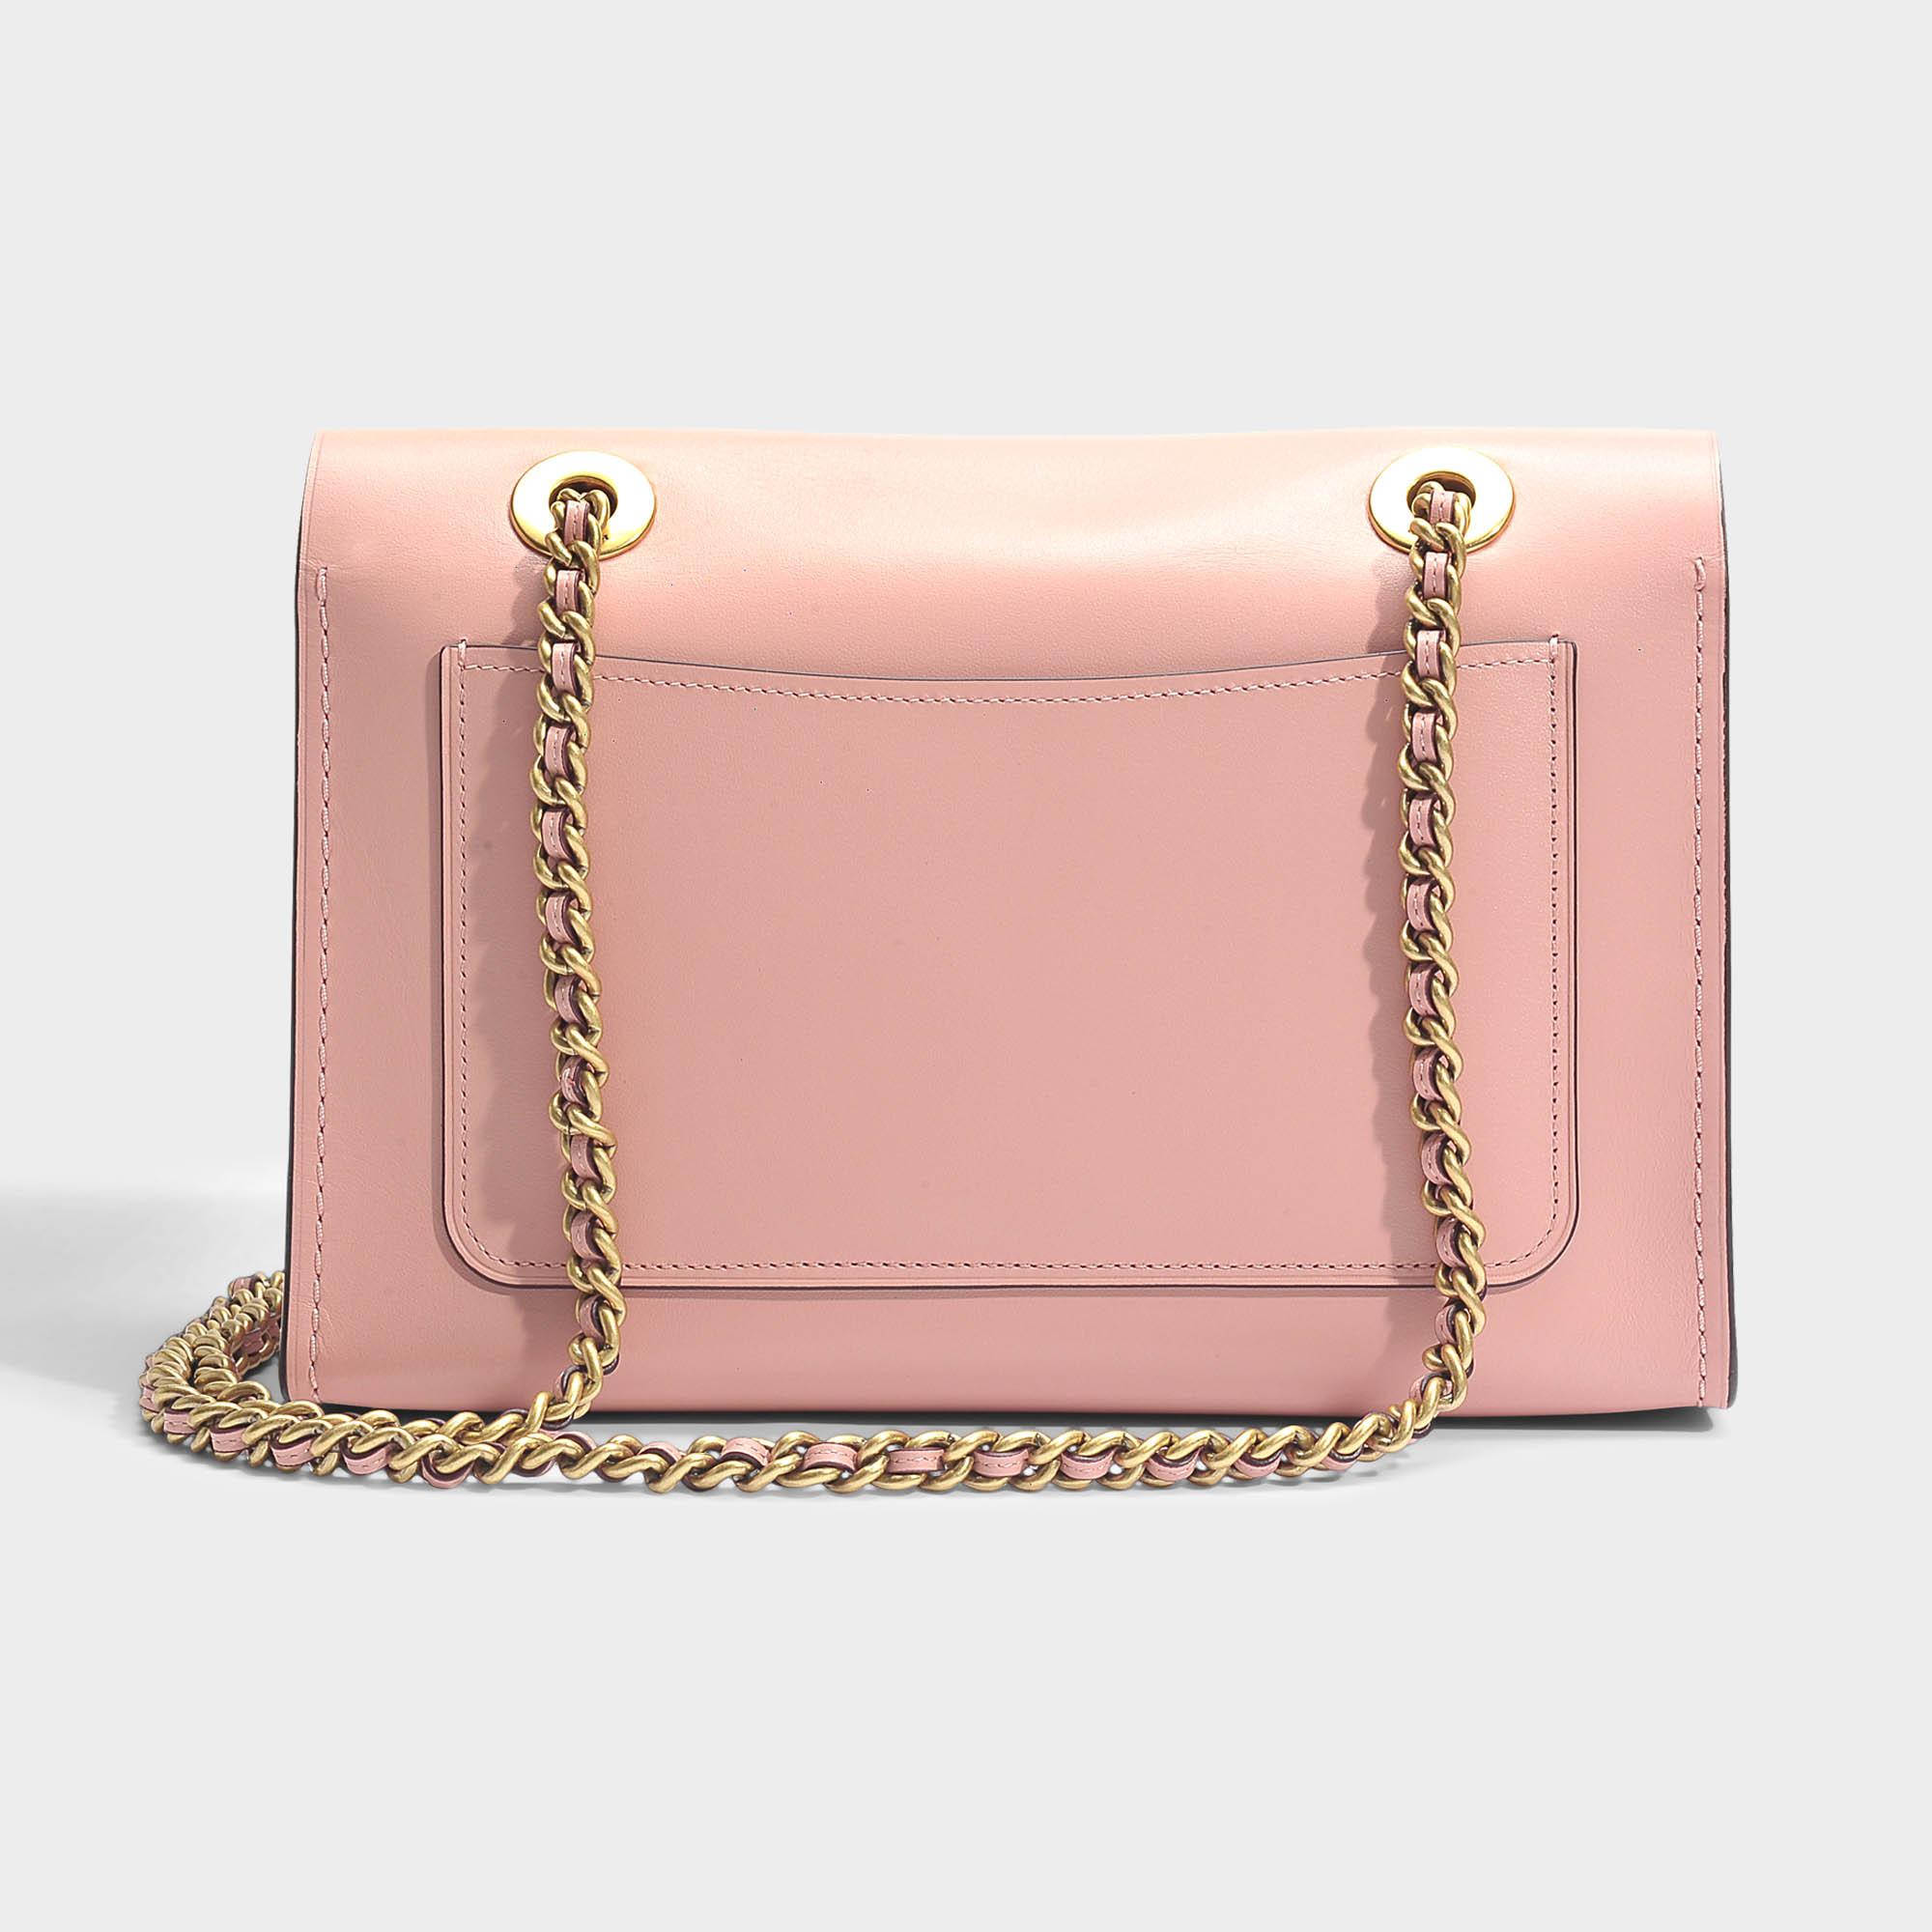 COACH Parker Shoulder Bag In Peony Calfskin in Pink - Lyst